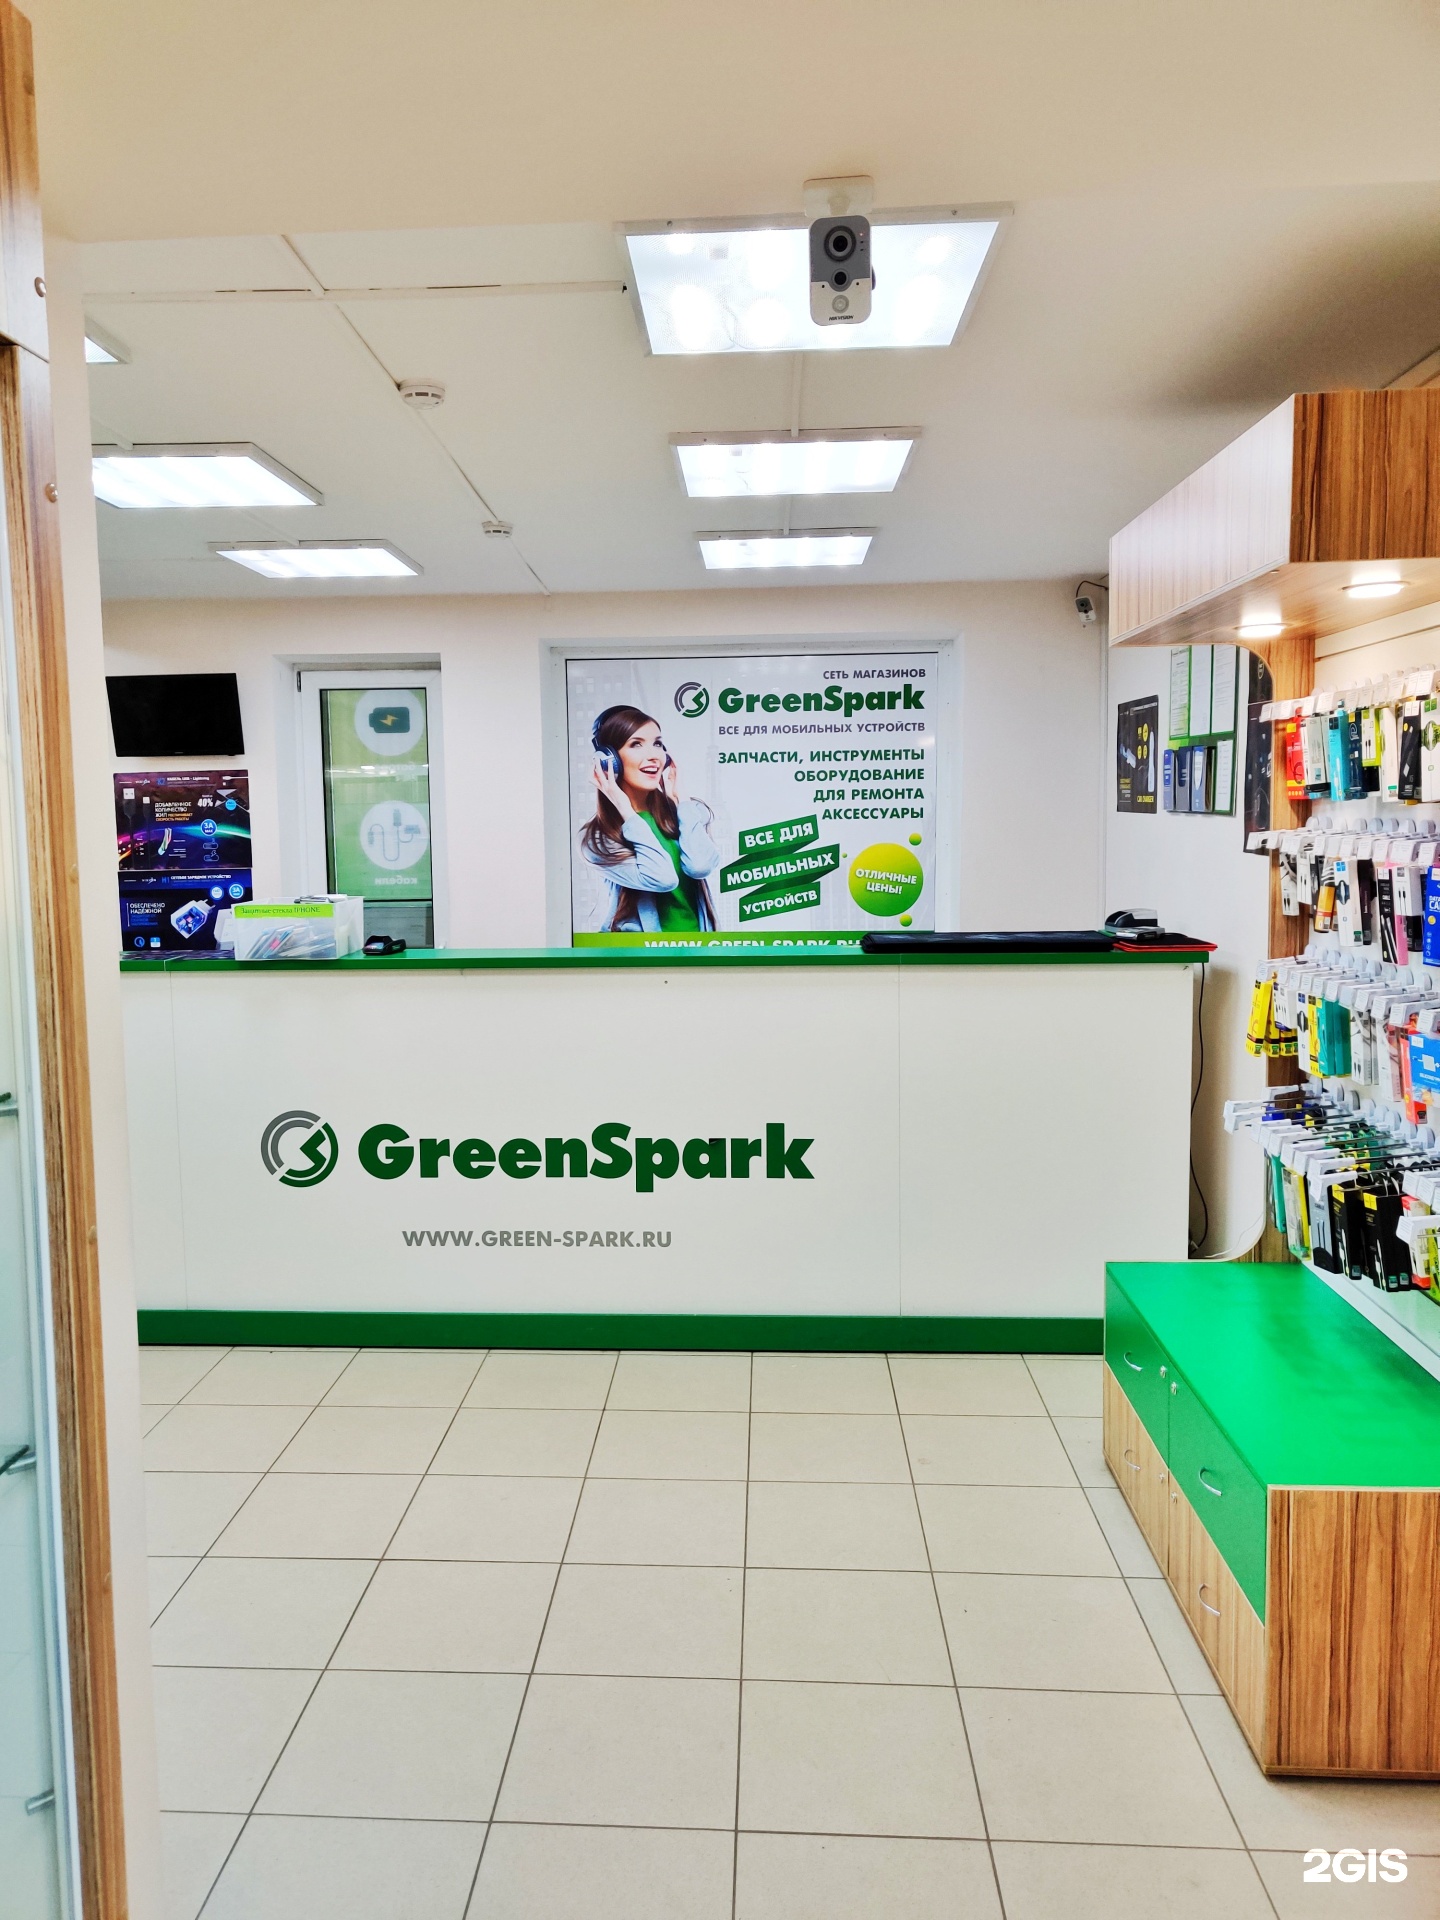 Greenspark сайт